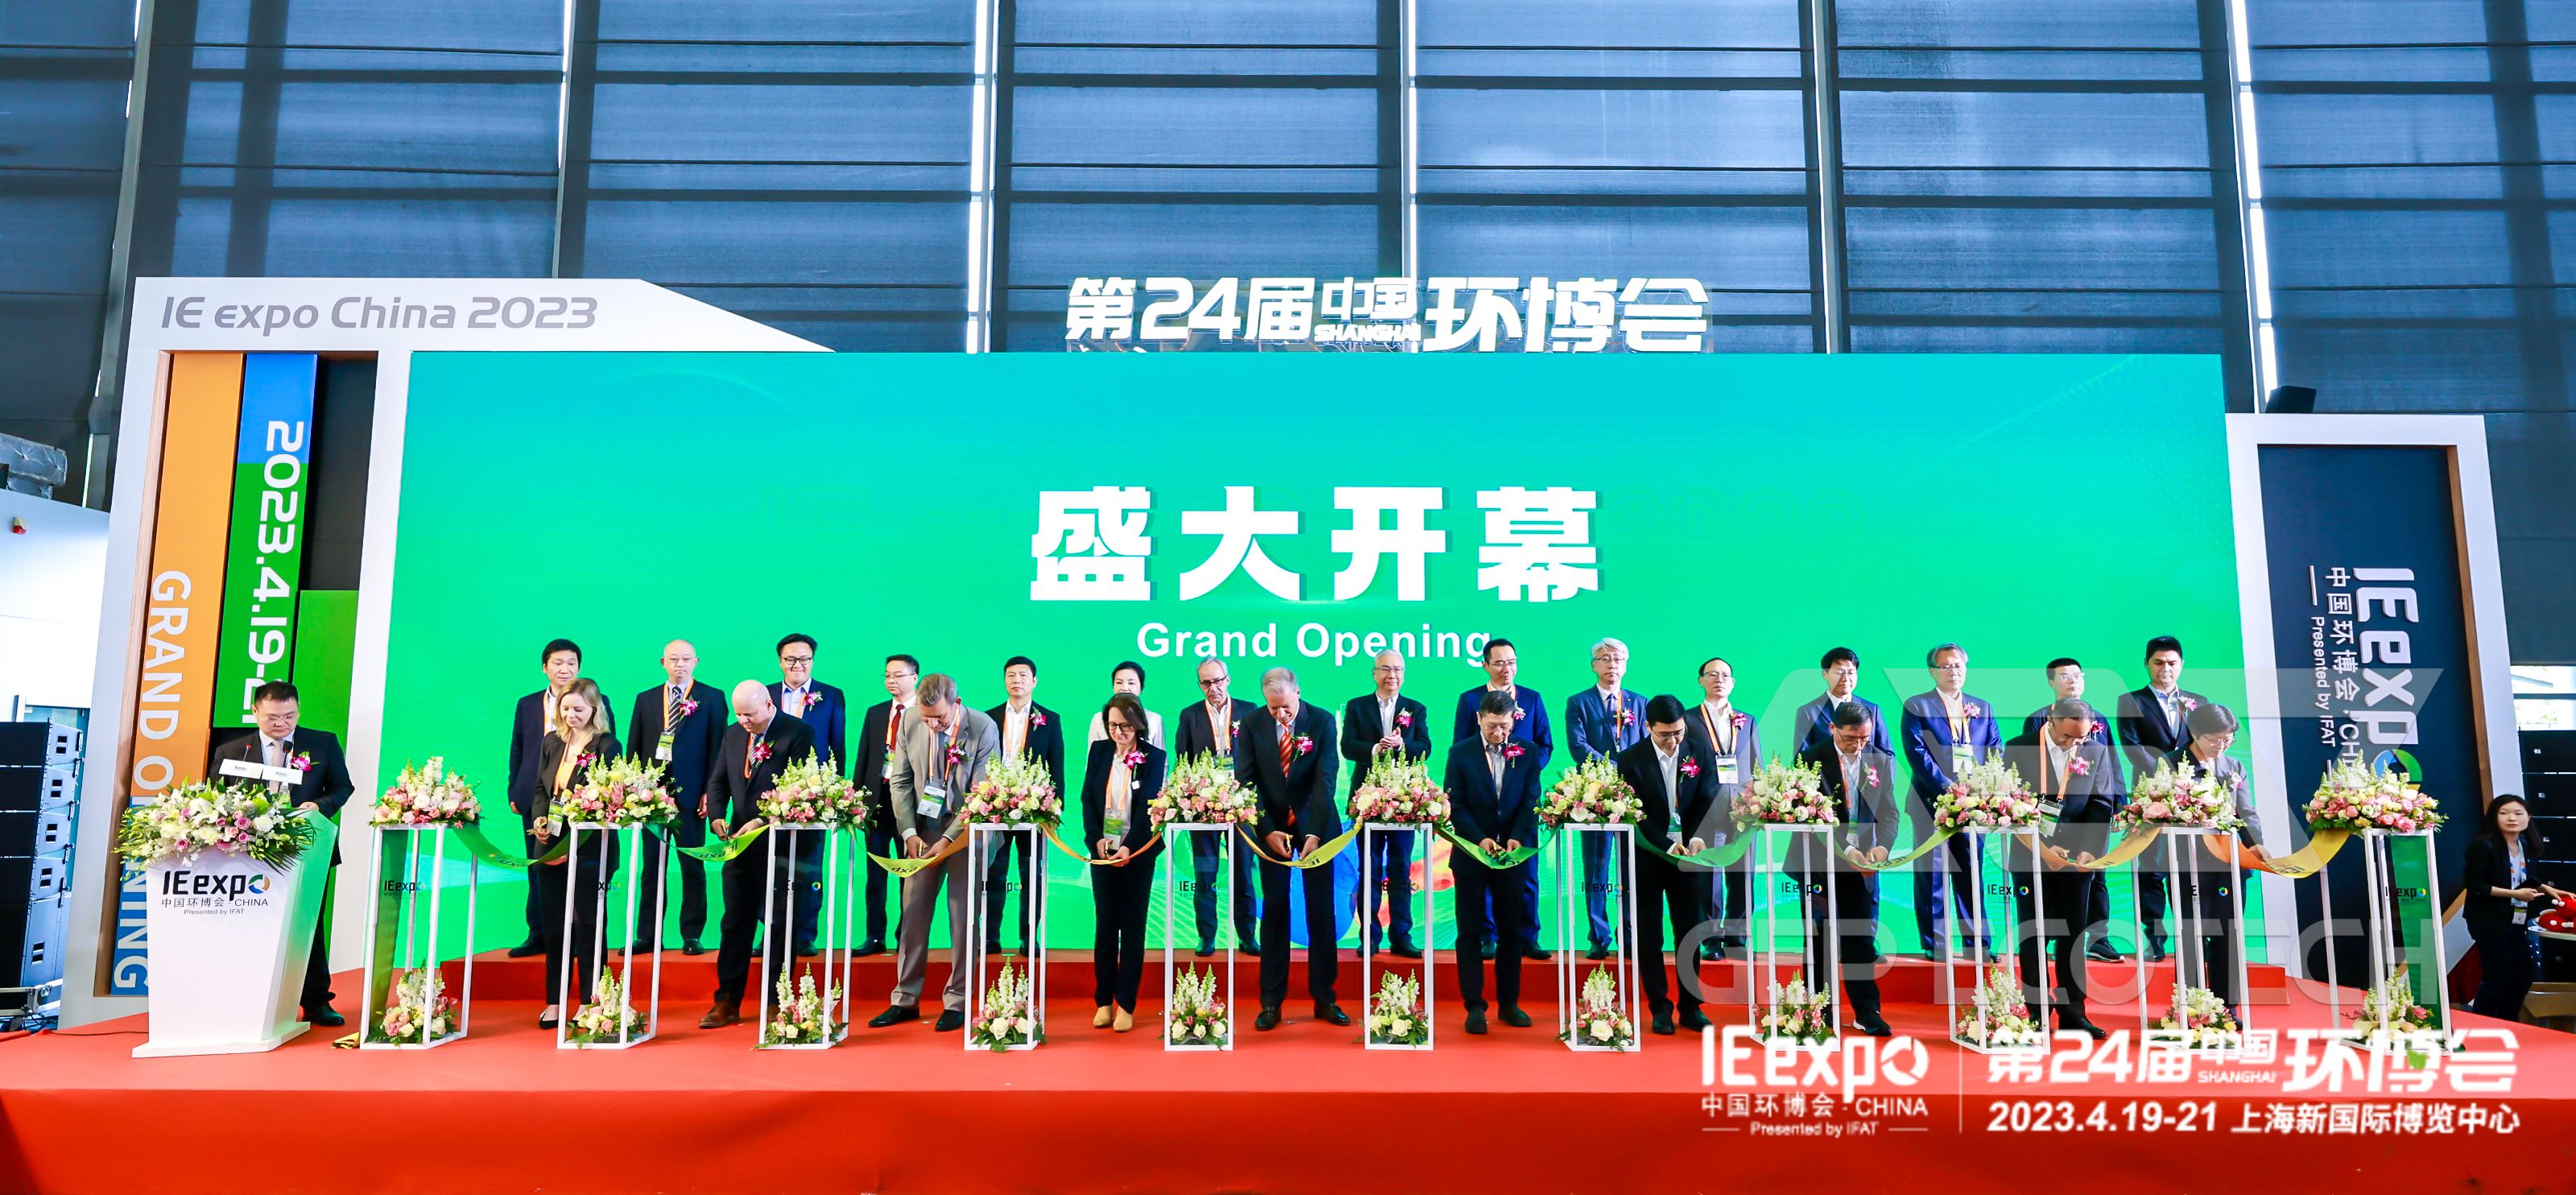 The 24th China Environmental Expo